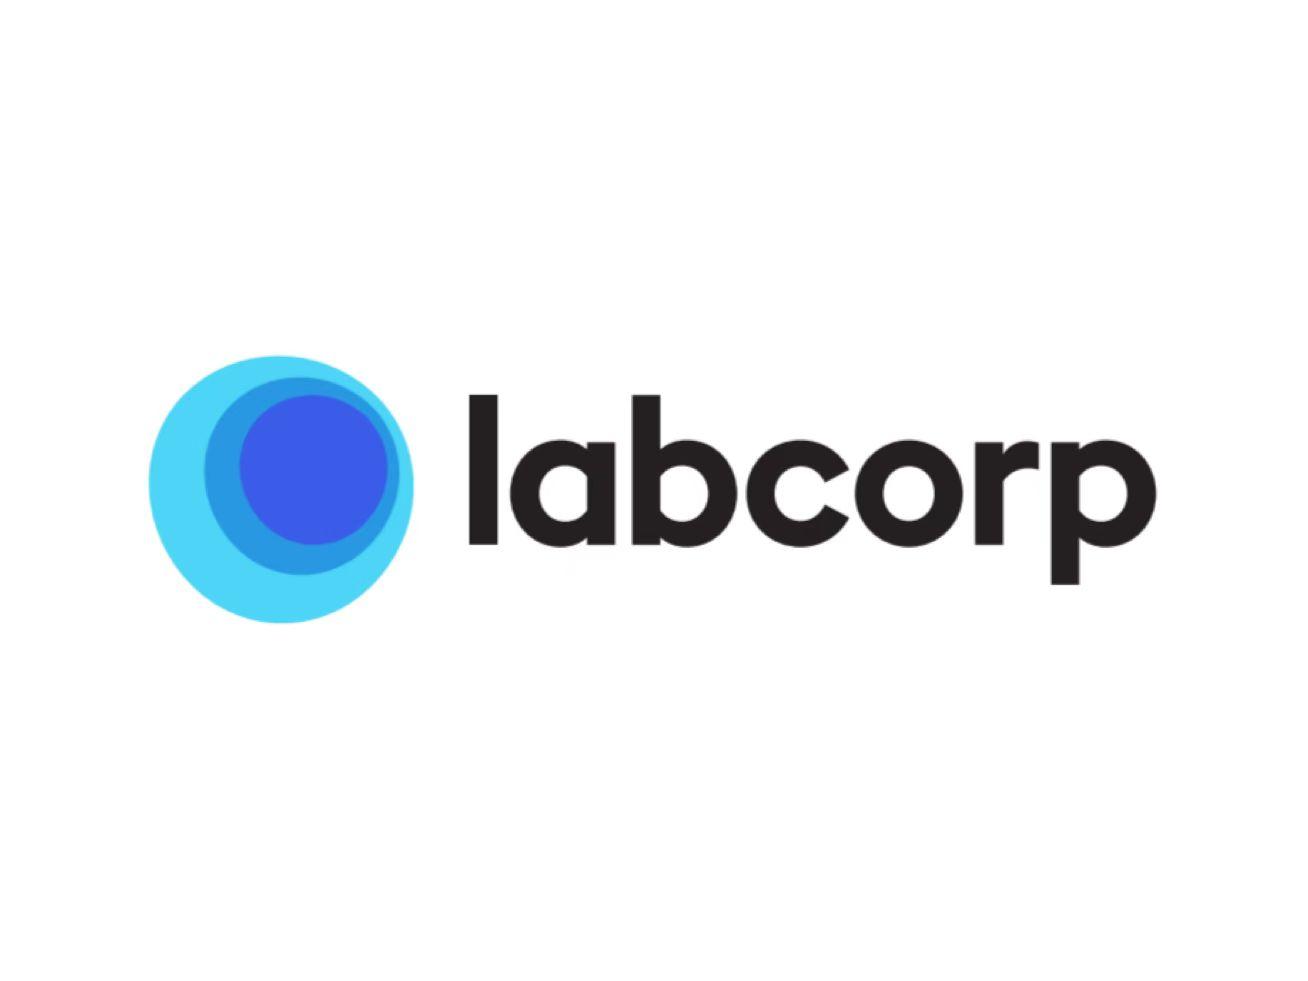 Labcorp Announces Acquisition of Select Assets of BioReference Health’s Diagnostics Business